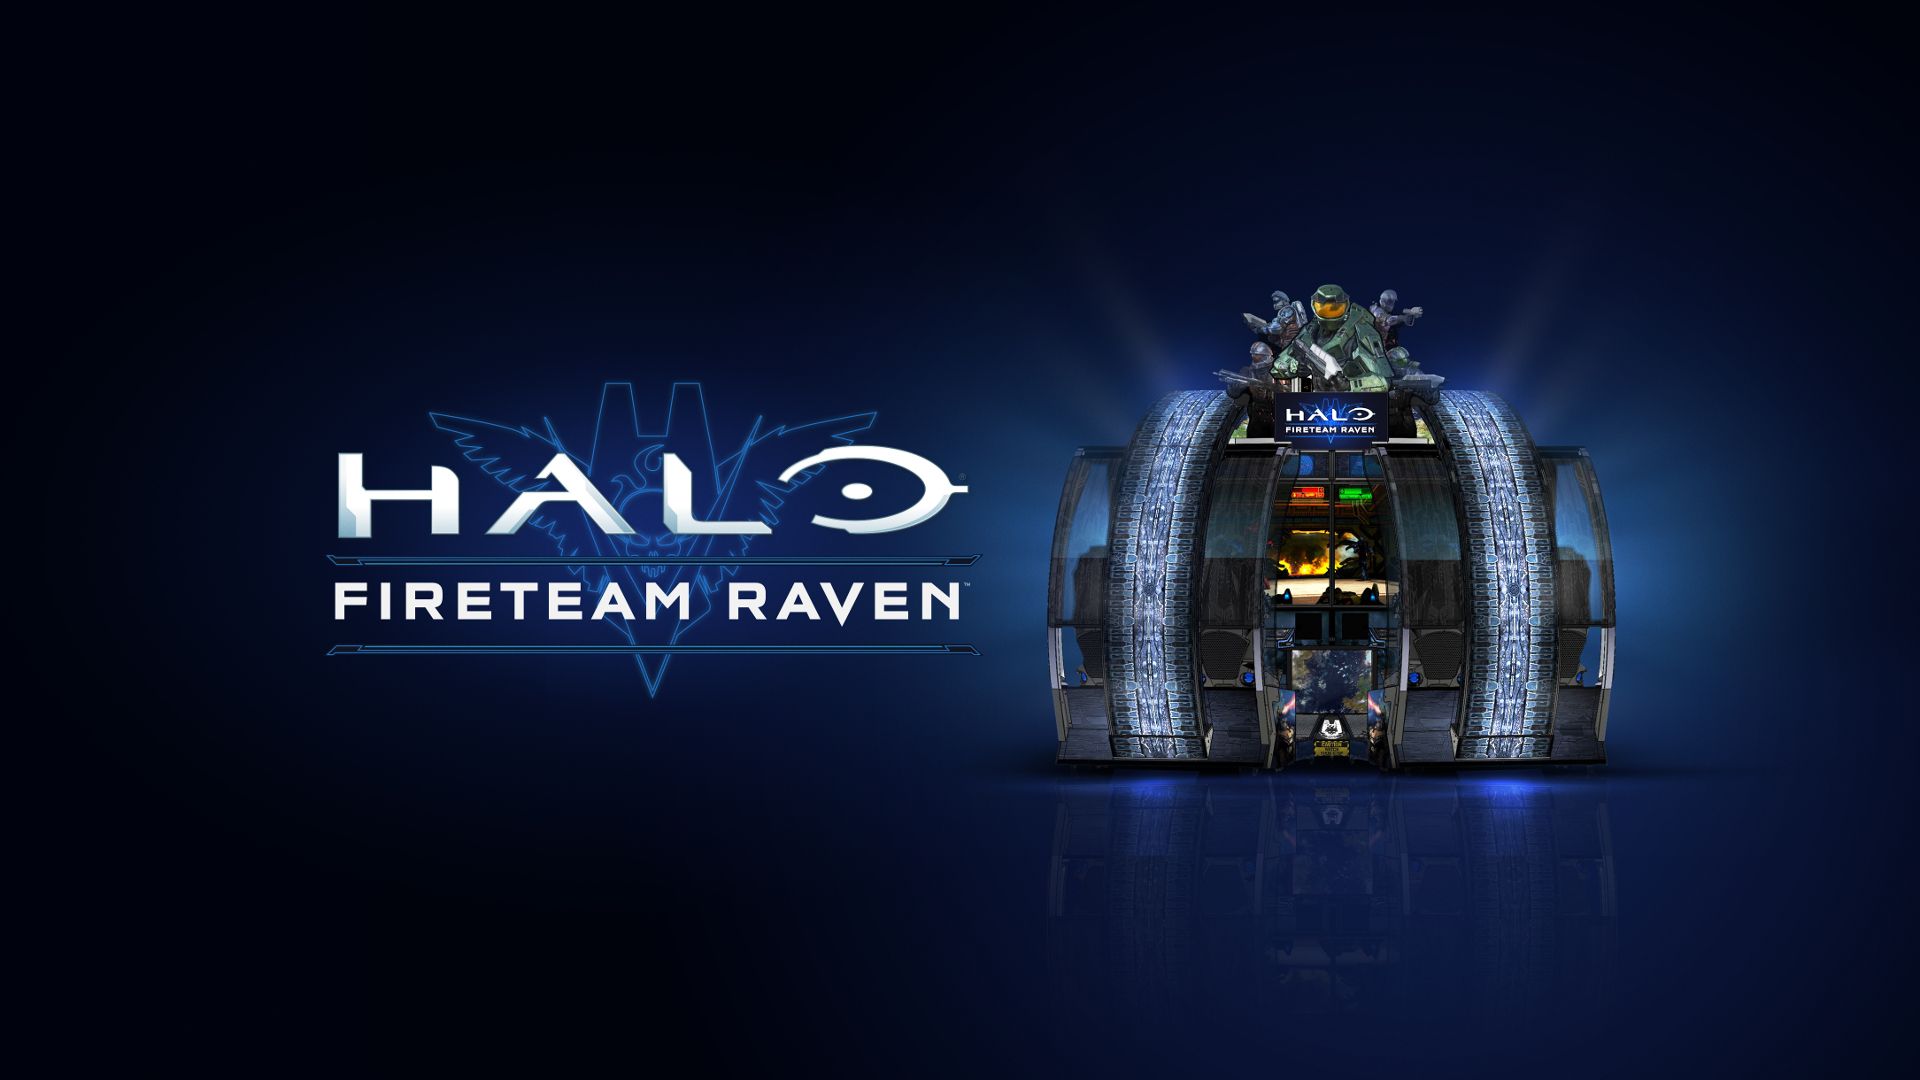 Halo: Fireteam Raven arcade rail shooter